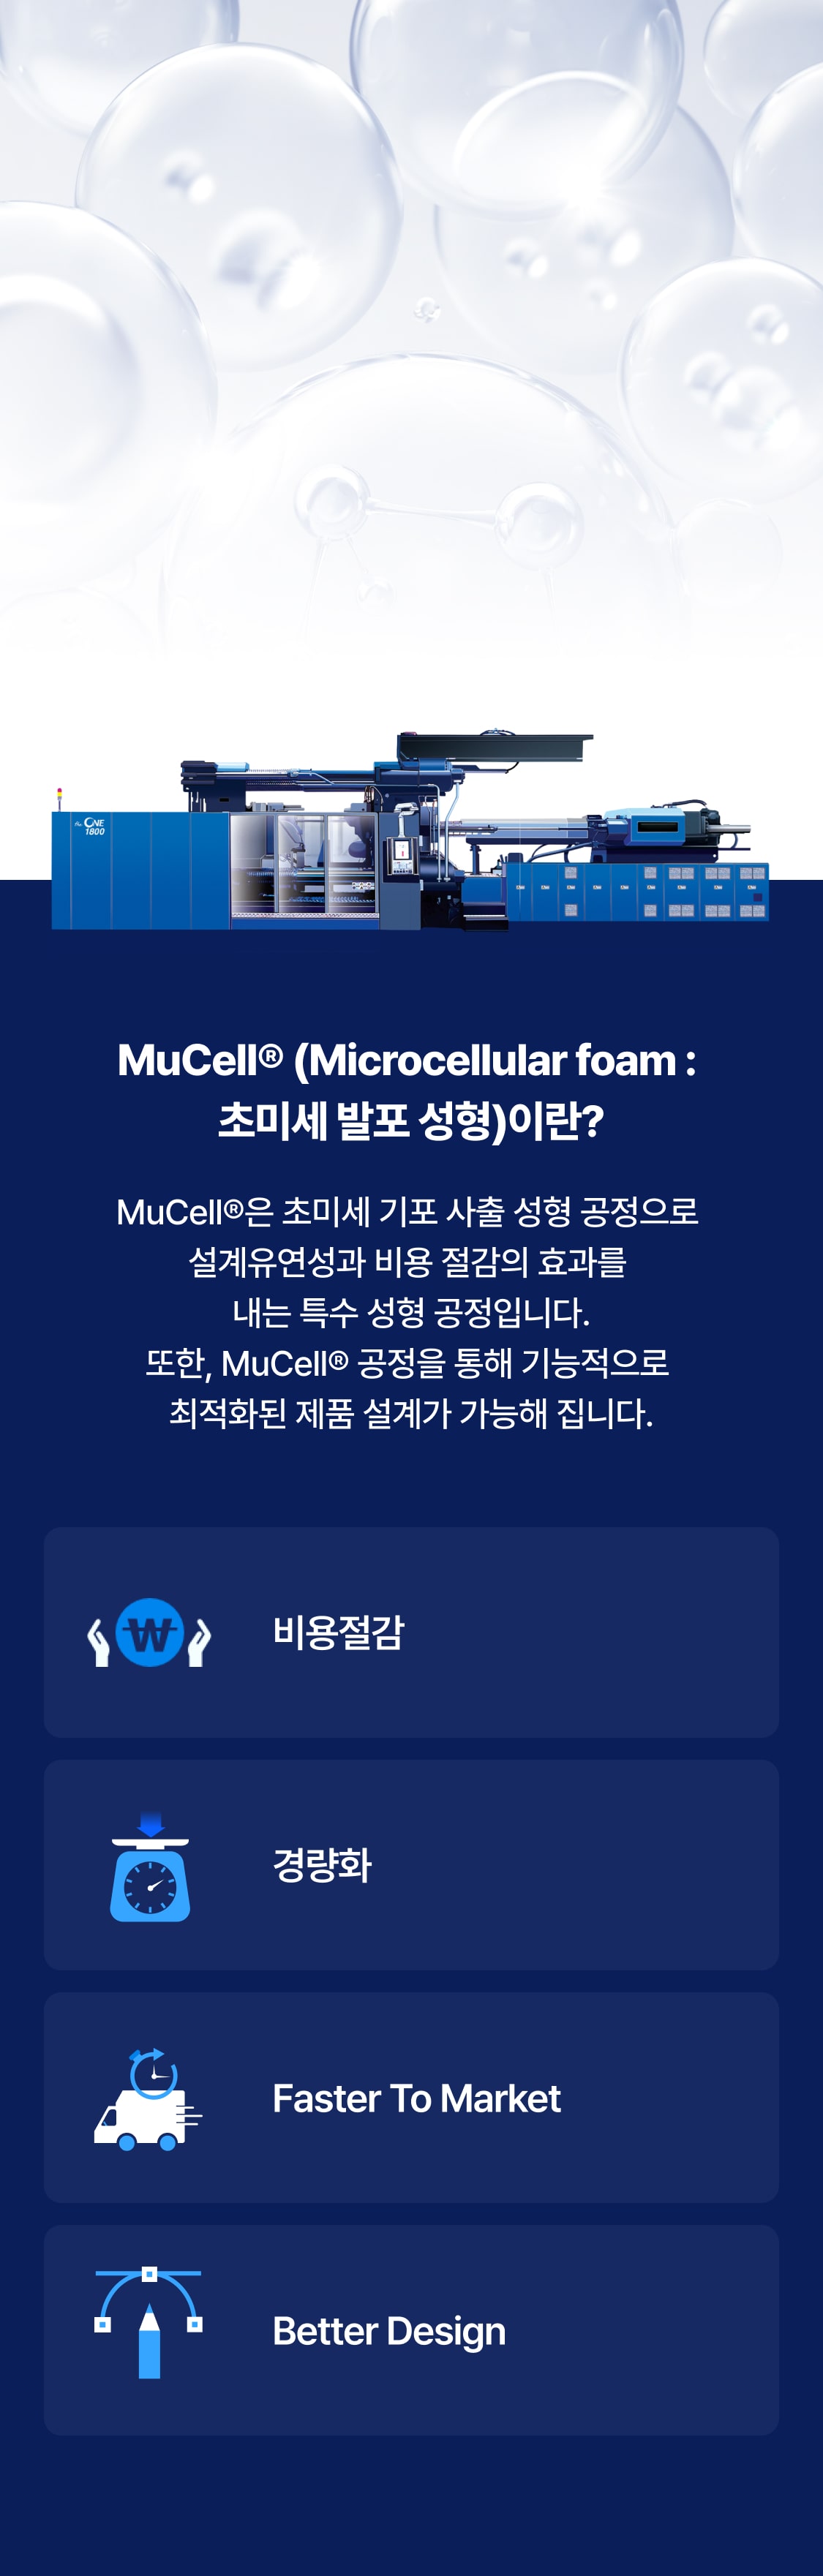 MuCell® (Microcellular foam: 초미세 발포 성형)이란? MuCell®은 초미세 기포 사출 성형 공정으로 설계유연성과 비용 절감의 효과를 내는 특수 성형 공정입니다. 또한, MuCell® 공정을 통해 기능적으로 최적화된 제품 설계가 가능해 집니다. 장점: 비용절감/경량화/Faster to market/Better Design